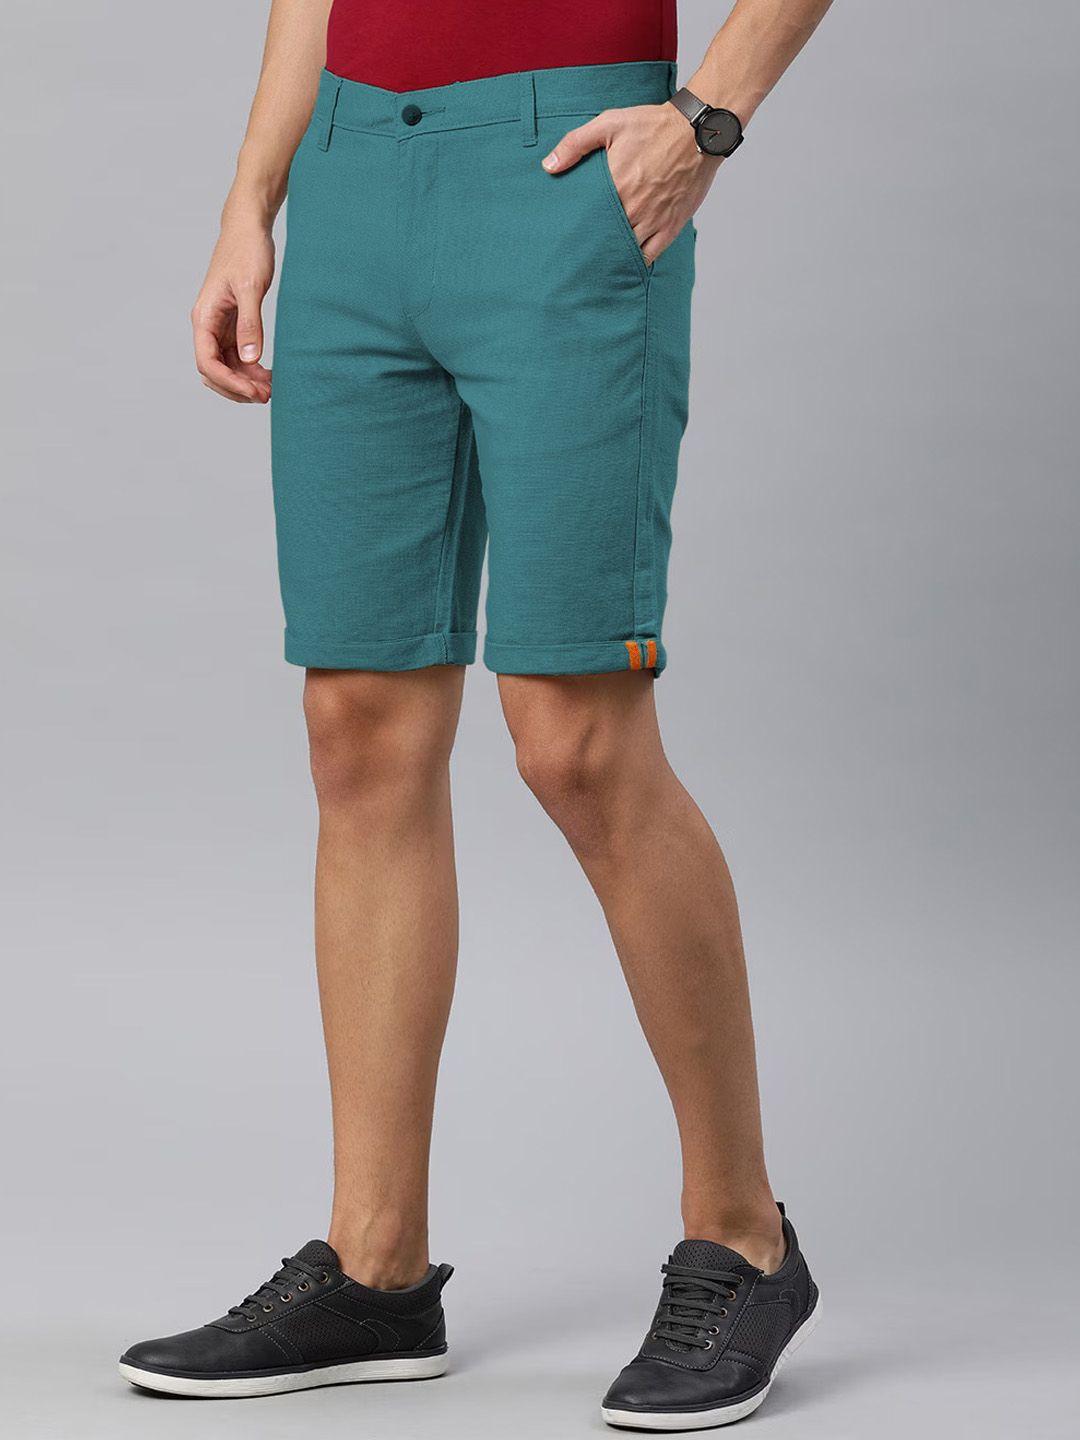 ivoc-men-mid-rise-slim-fit-shorts